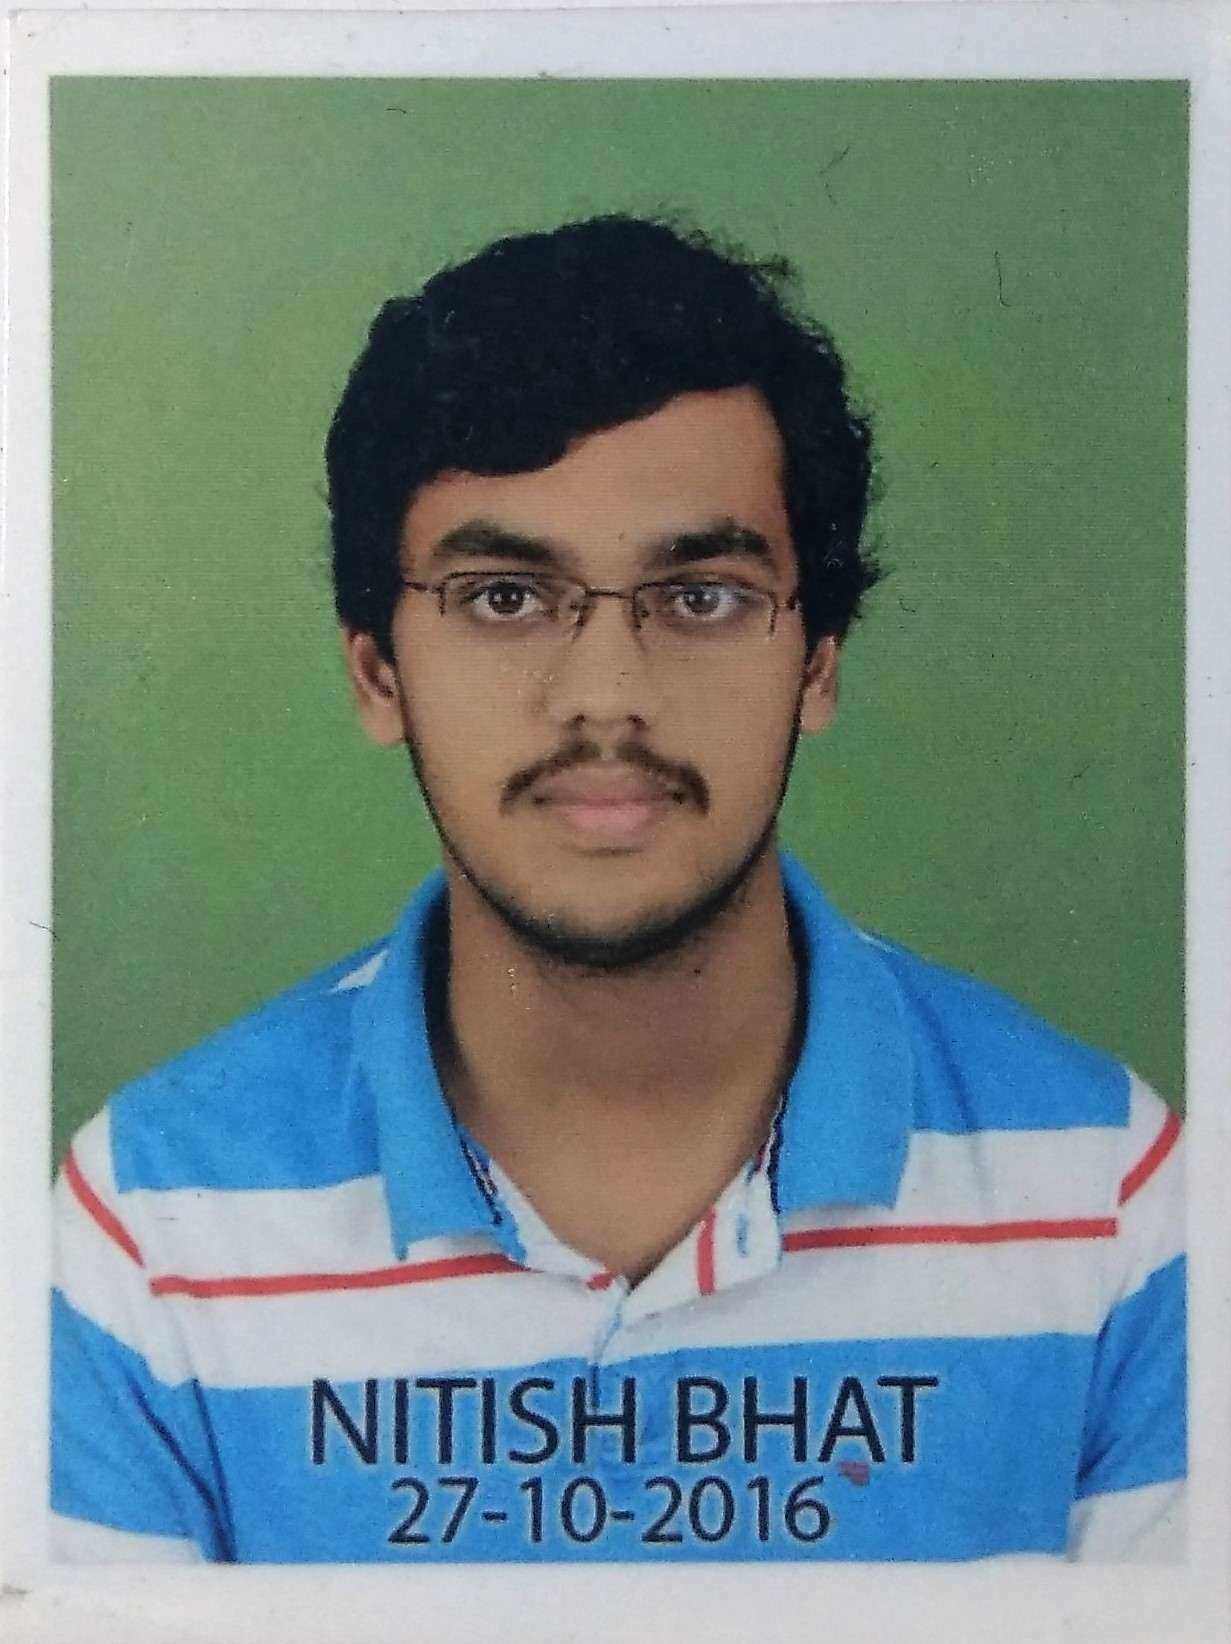 NITISH BHAT